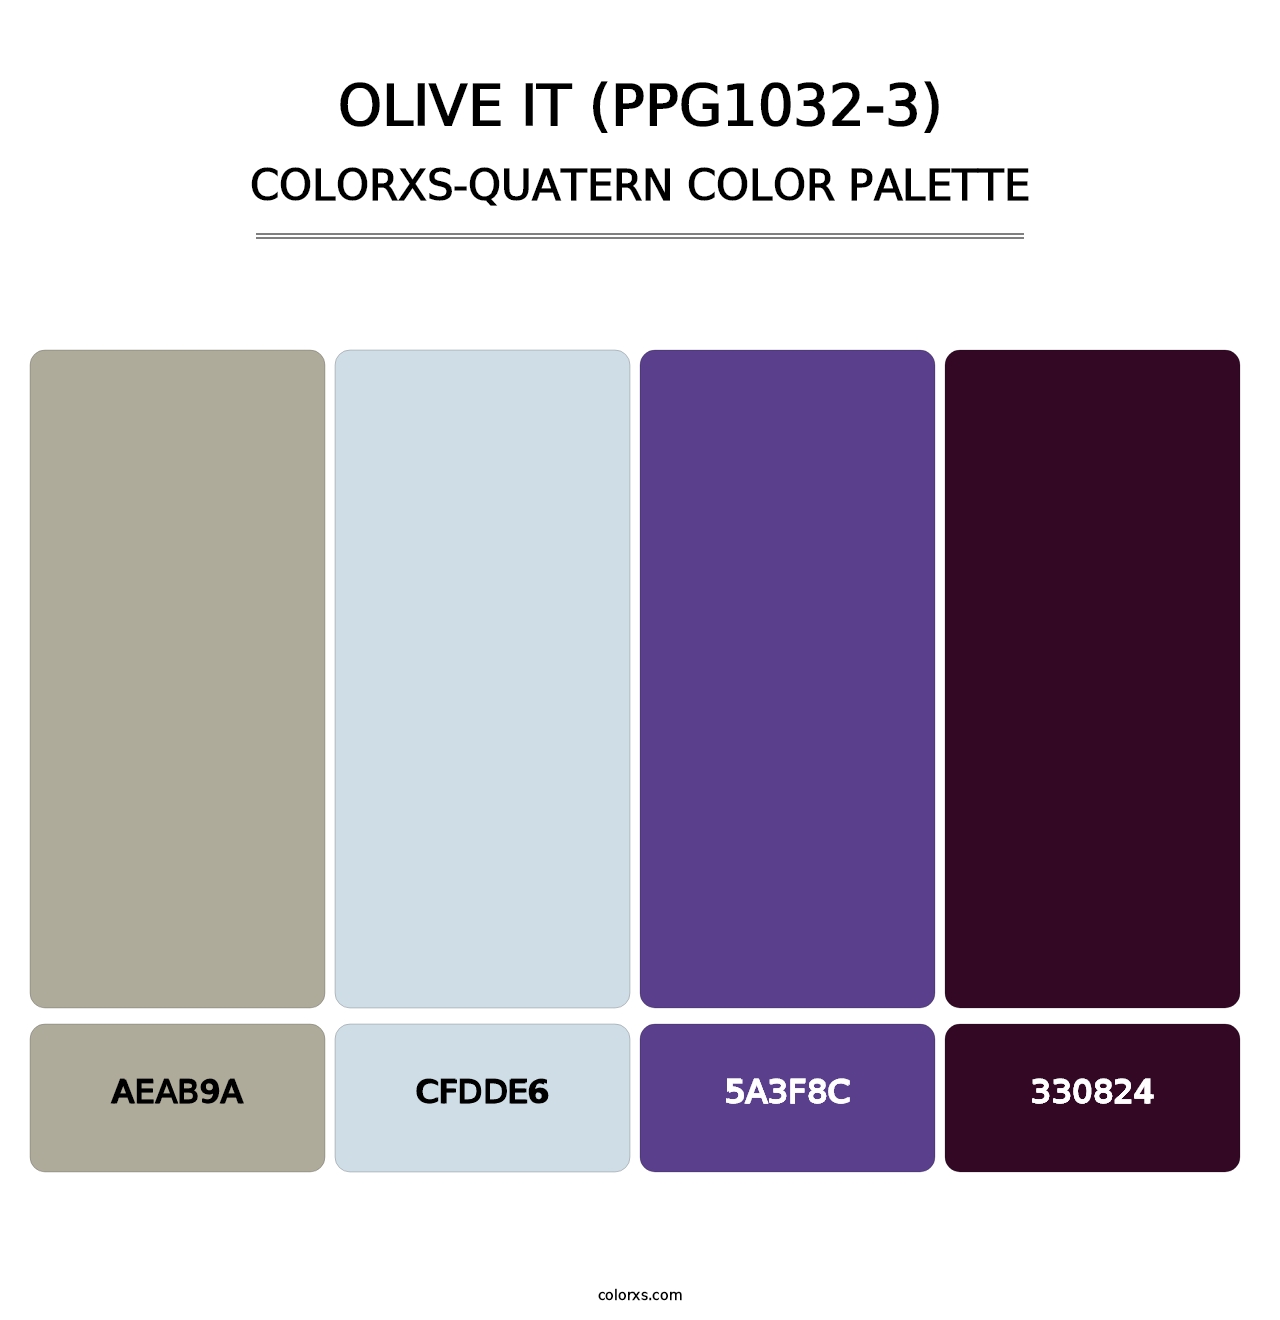 Olive It (PPG1032-3) - Colorxs Quatern Palette